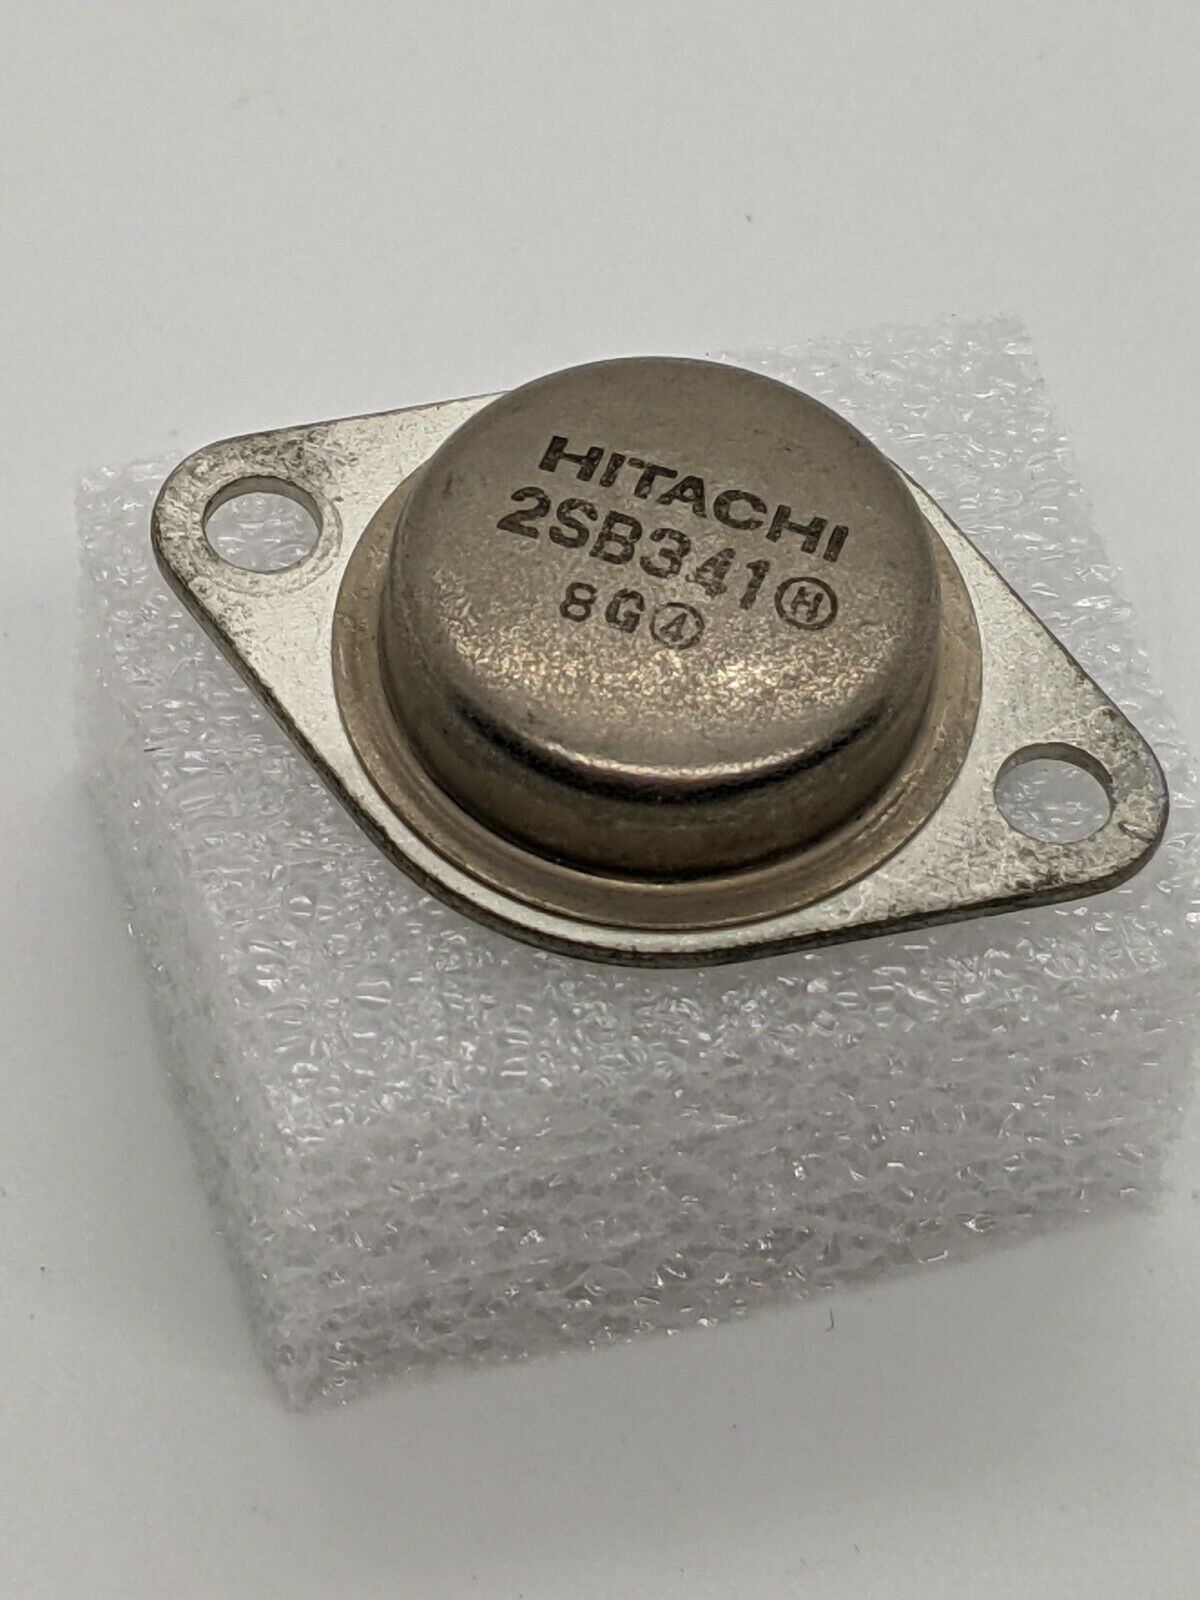 2SB341, Clean Pullout, Hitachi